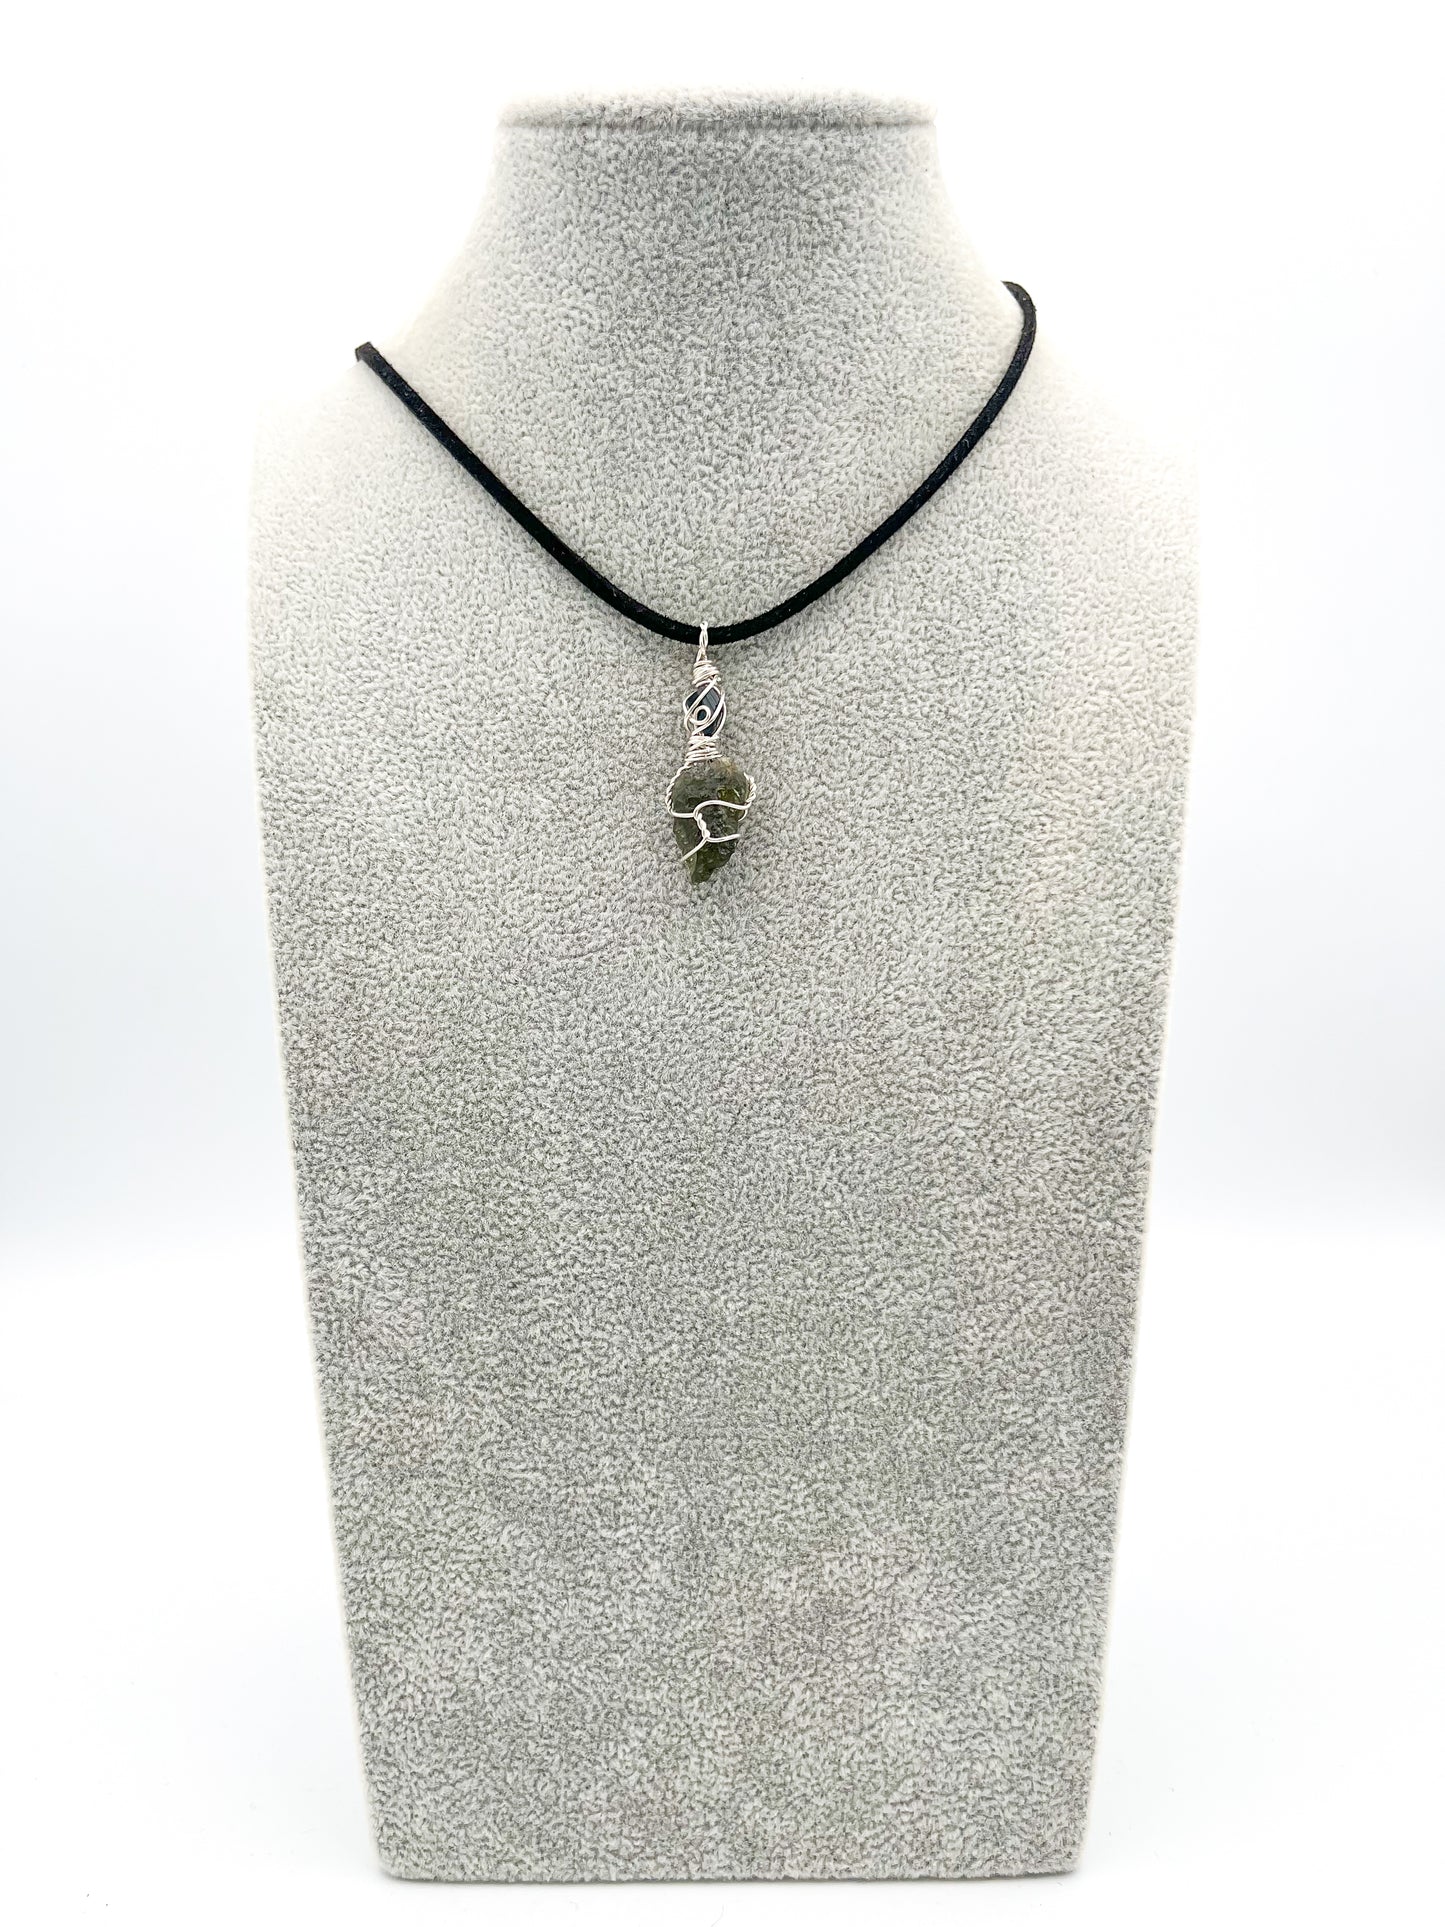 genuine moldavite indicolite blue tourmaline silver pendant, wire wrapped jewelry, handmade gift